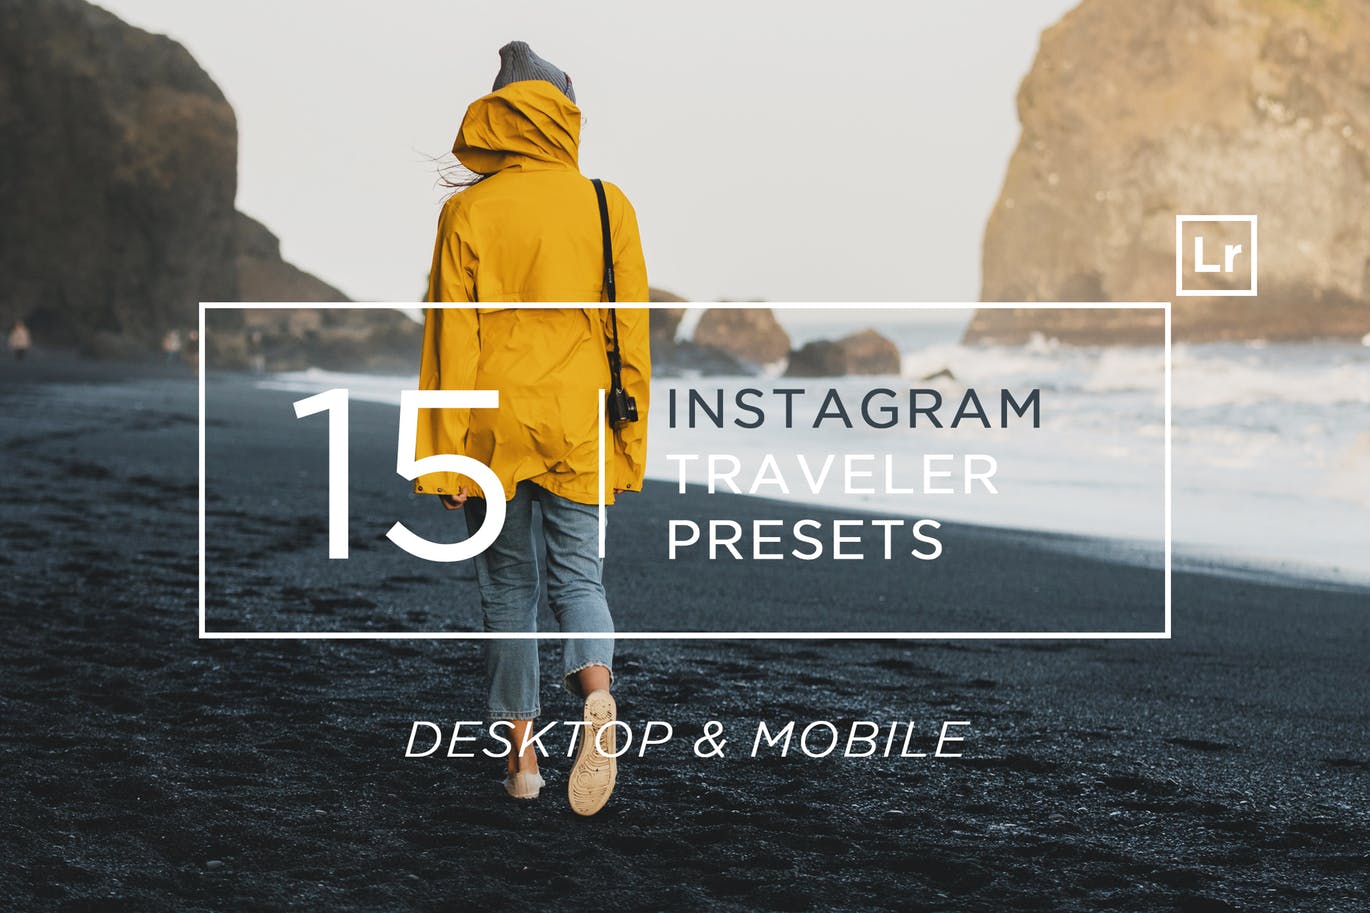 15款Instagram社交旅行照片滤镜风格亿图网易图库精选LR预设 15 Instagram Traveler Ligtroom Presets + Mobile插图